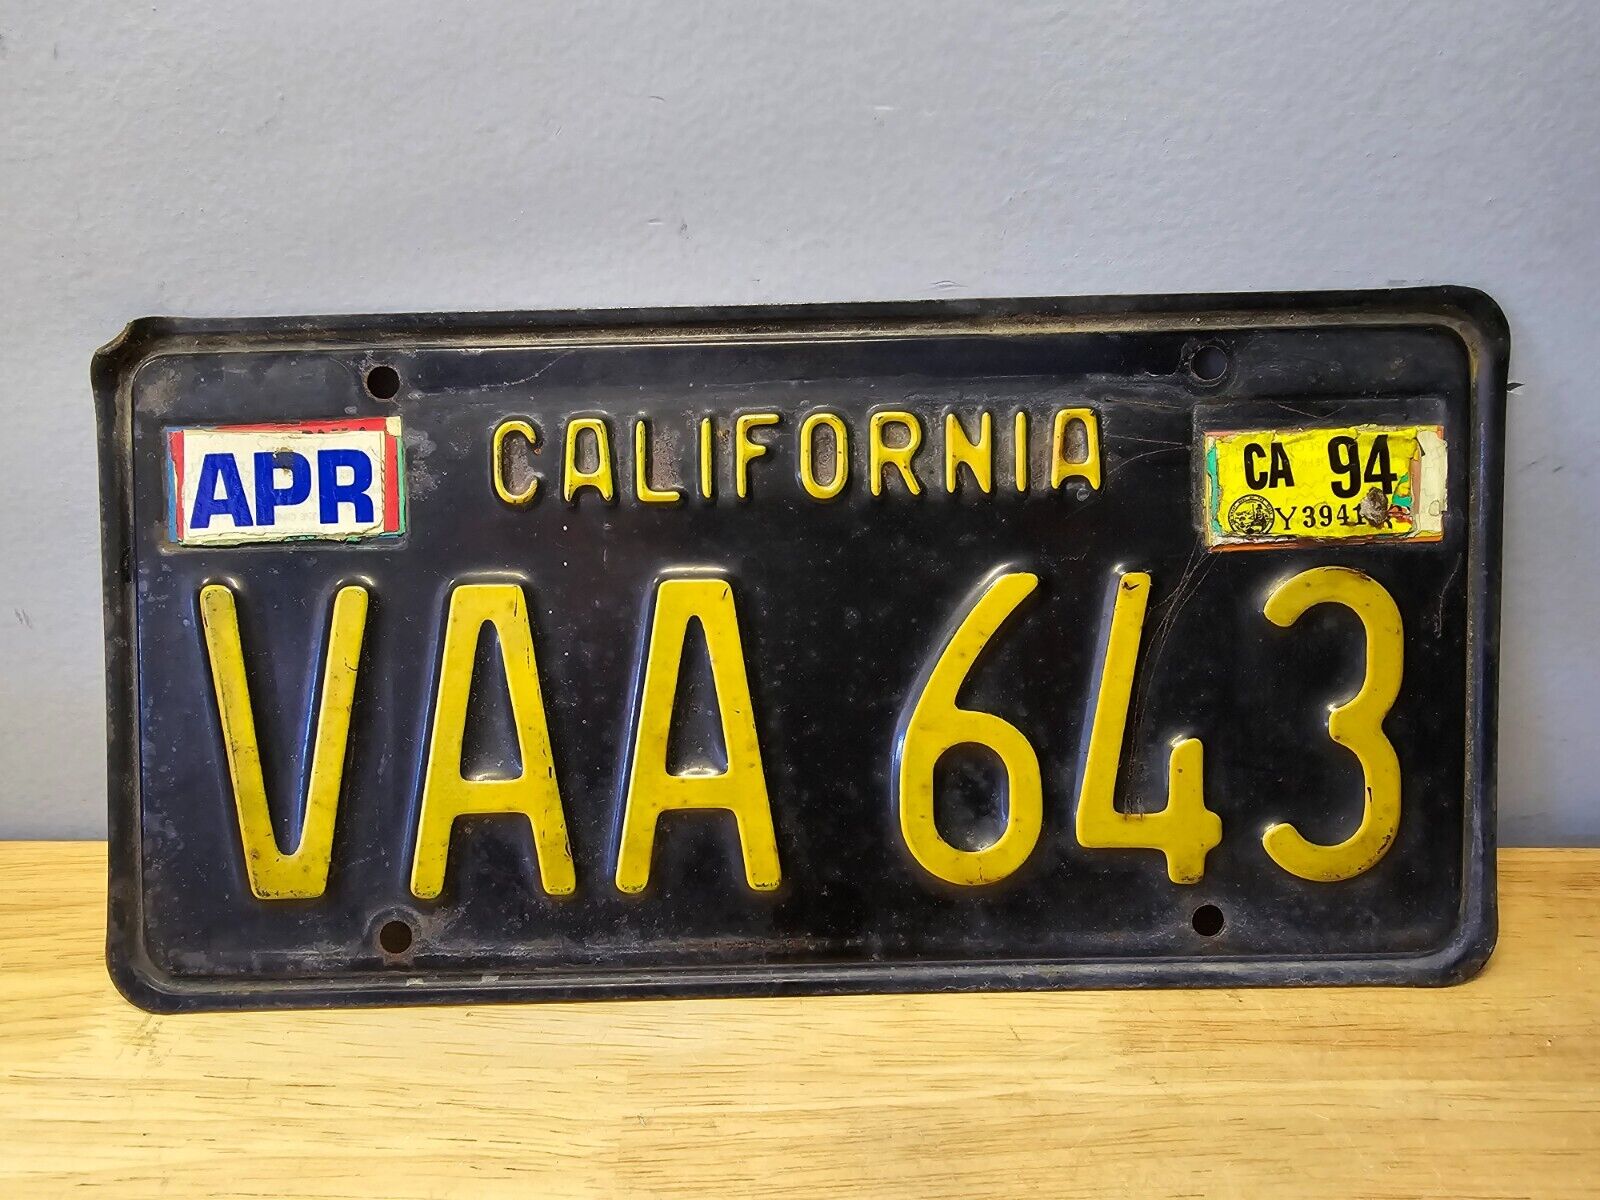 Vintage 1963 CALIFORNIA CA License Plate VAA643 Black & Yellow 1960's Car Plate